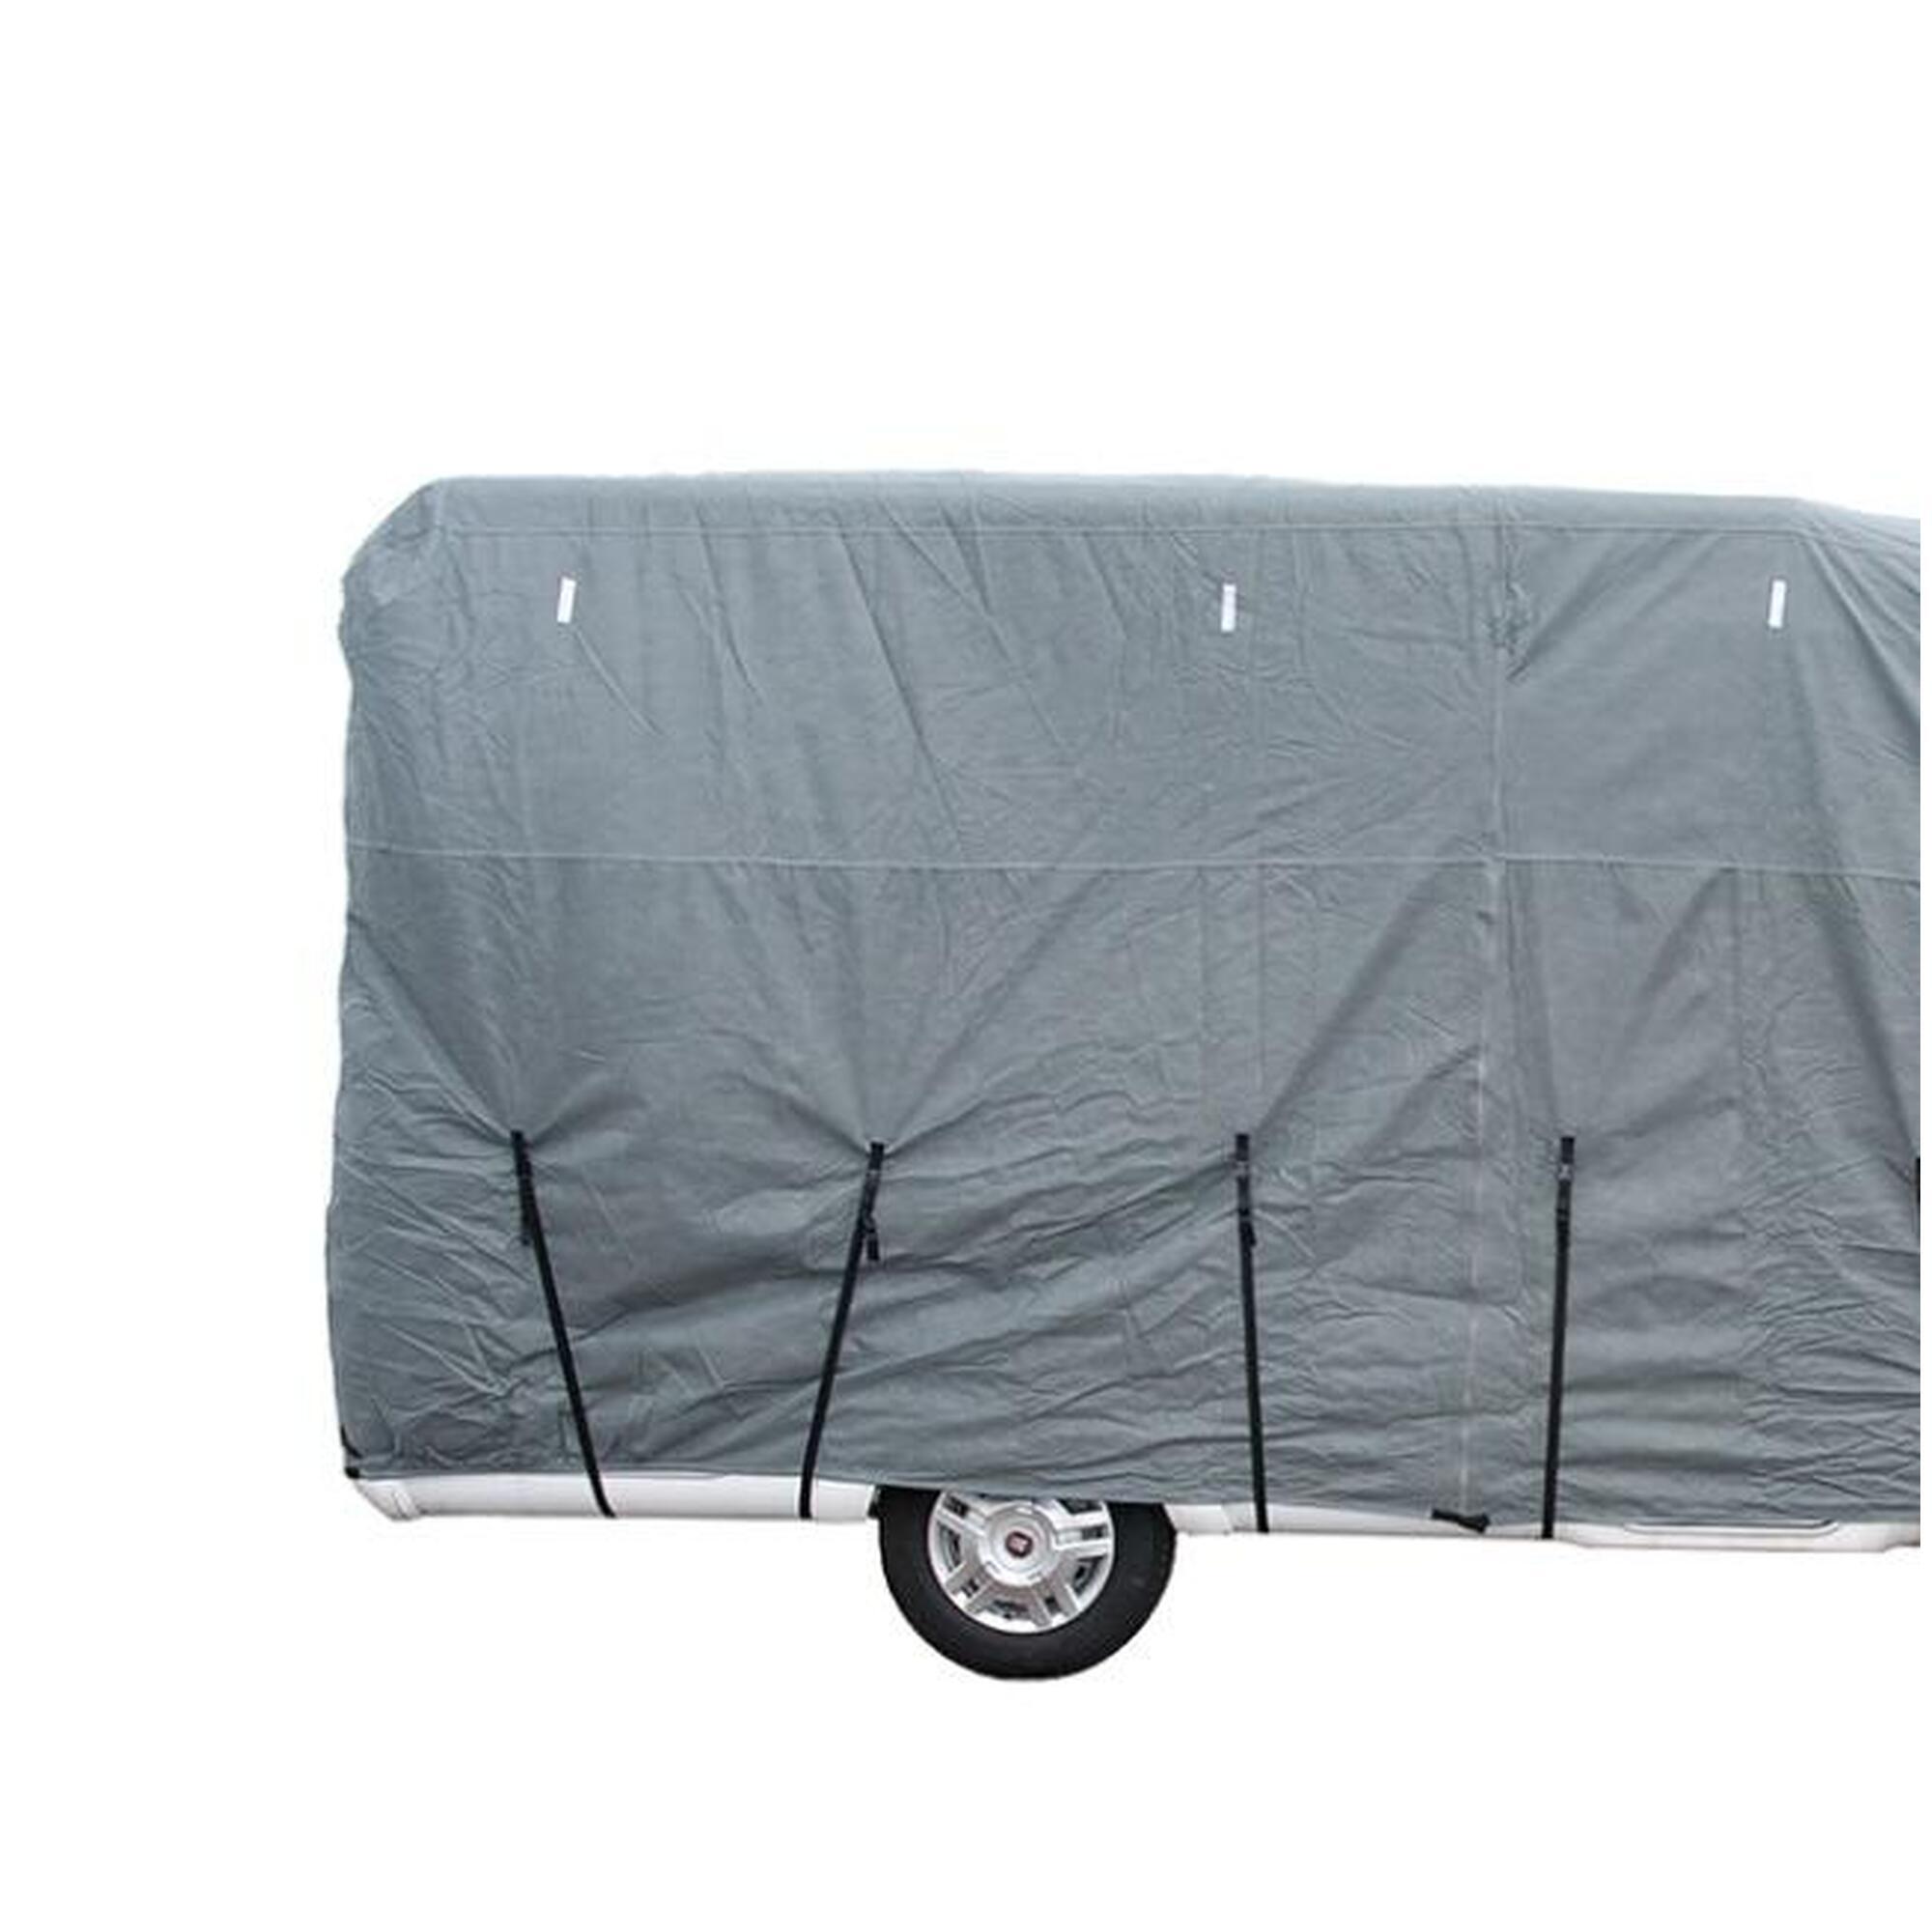 Travellife car couverture basic 750x240x270cm